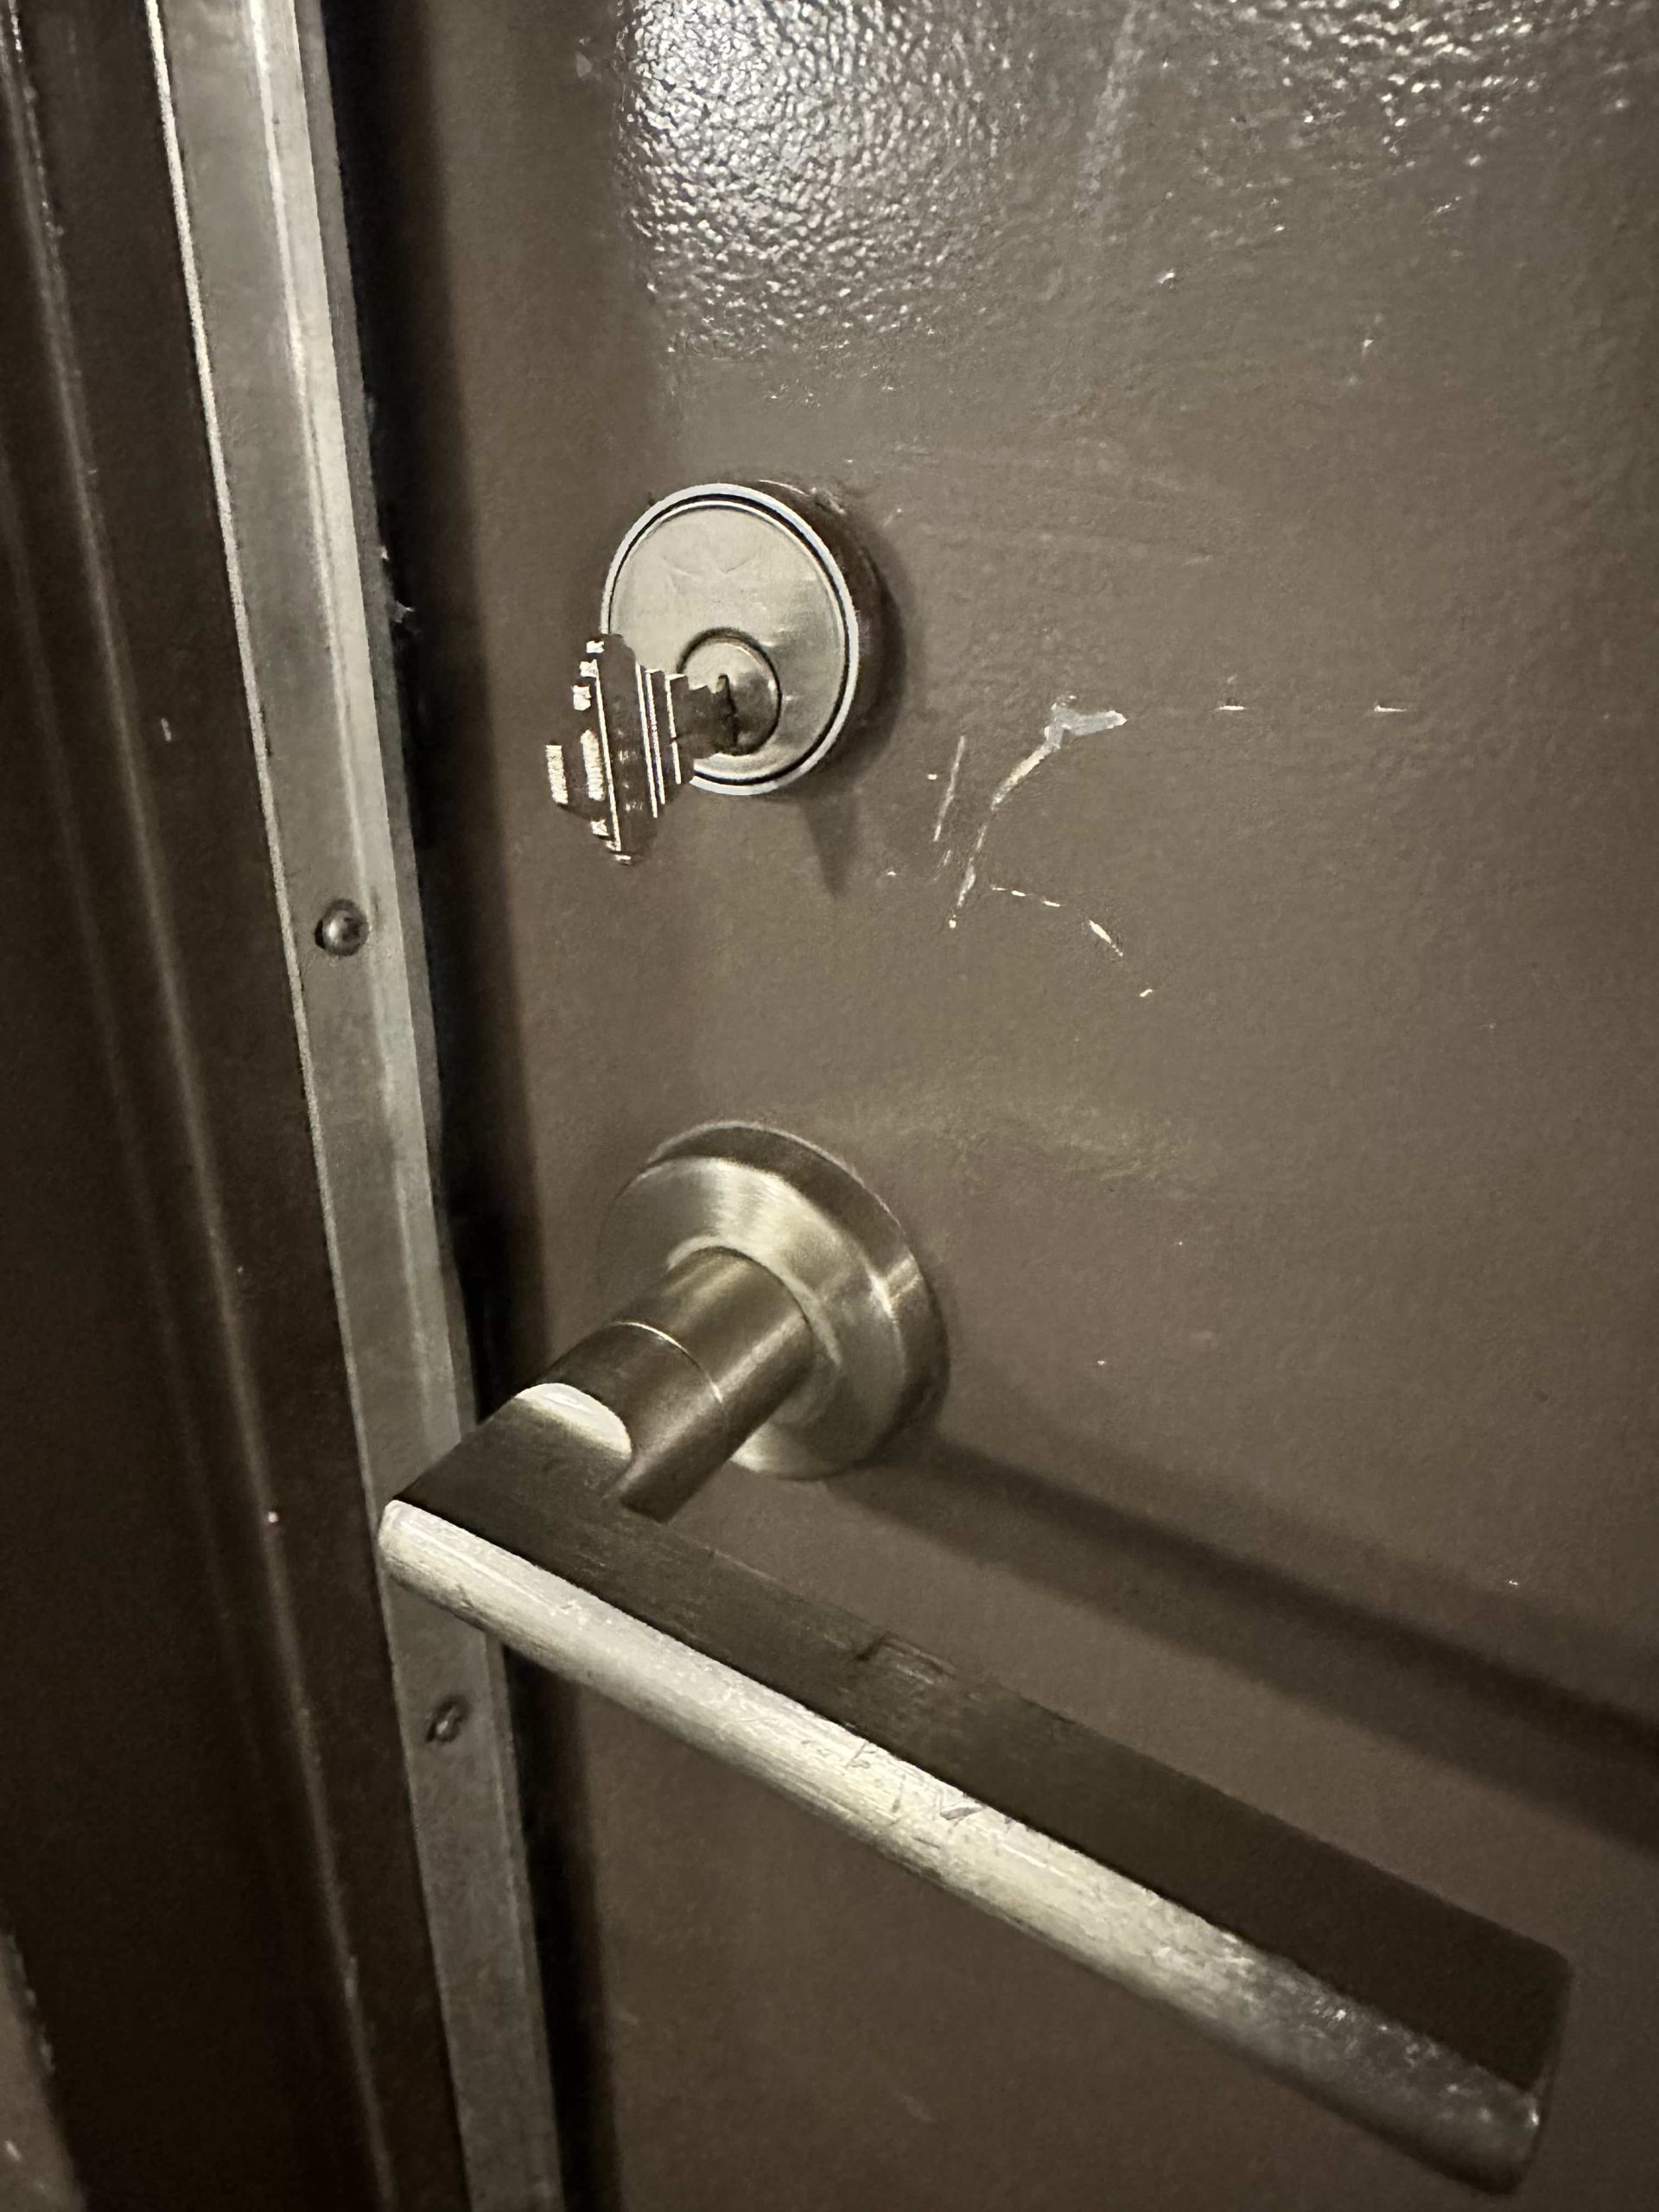 Schlage keyway lock on a business exit door installation